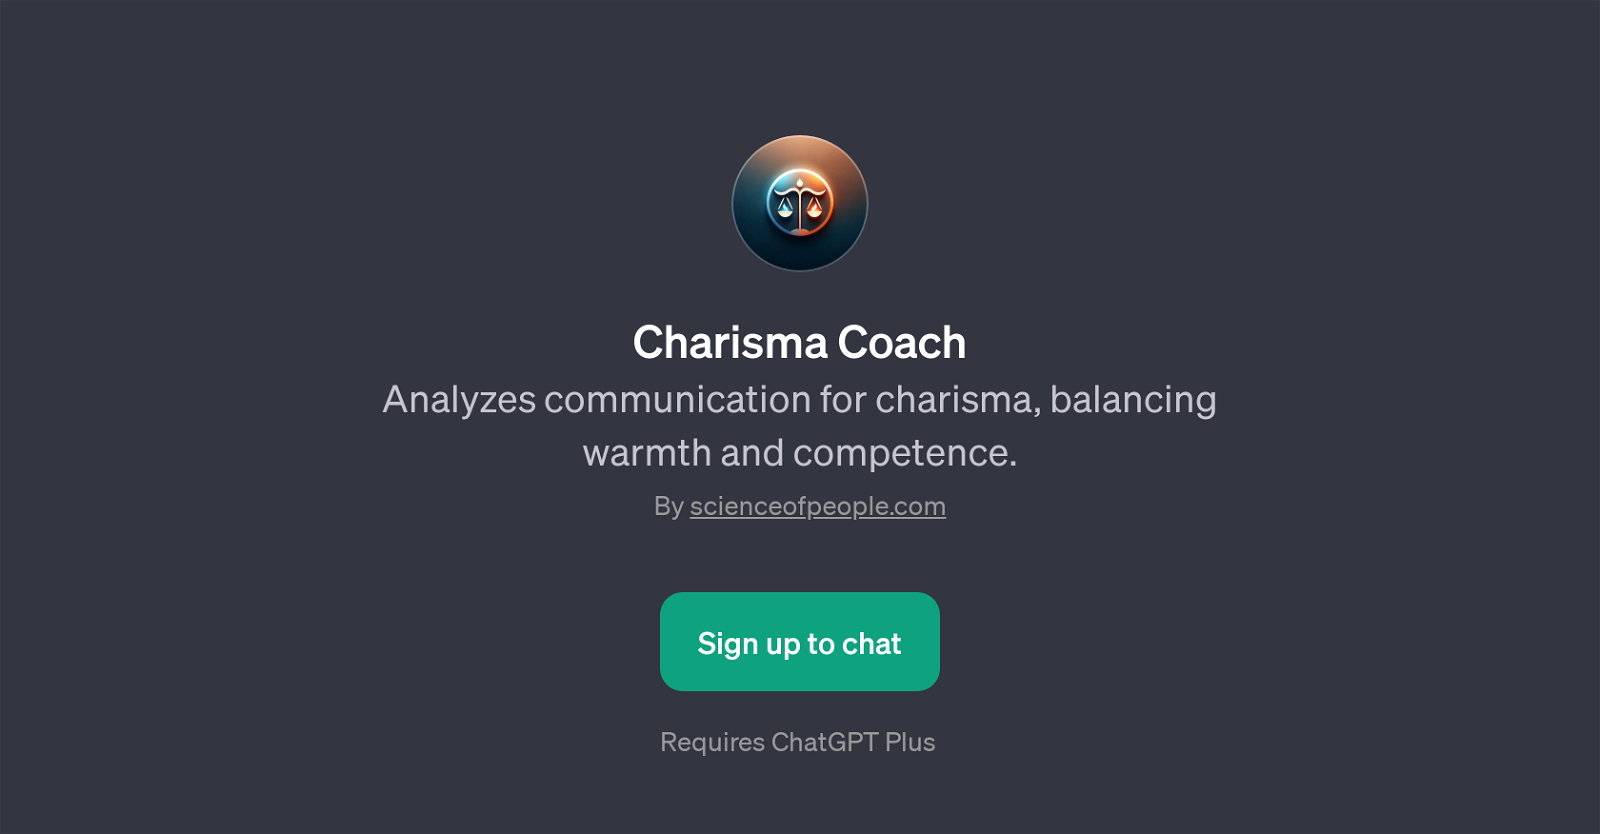 Charisma Coach website